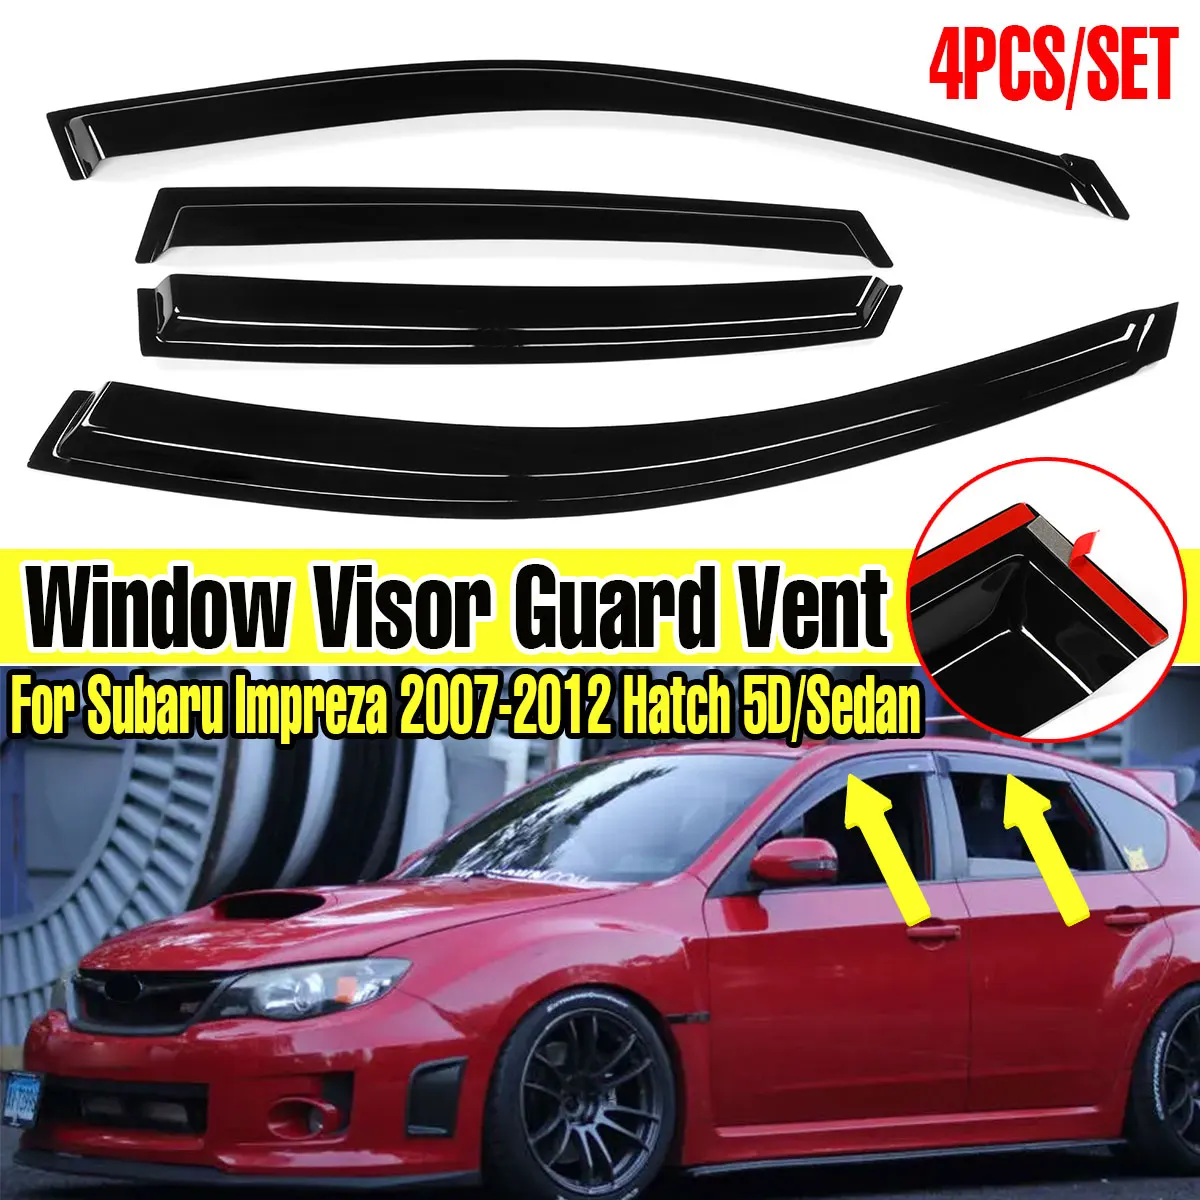 Black Car Side Window Deflector Window Visor Vent For Subaru Impreza 2007-2012 Hatch 5D/ Sedan Wind Shields Awnings Shelters